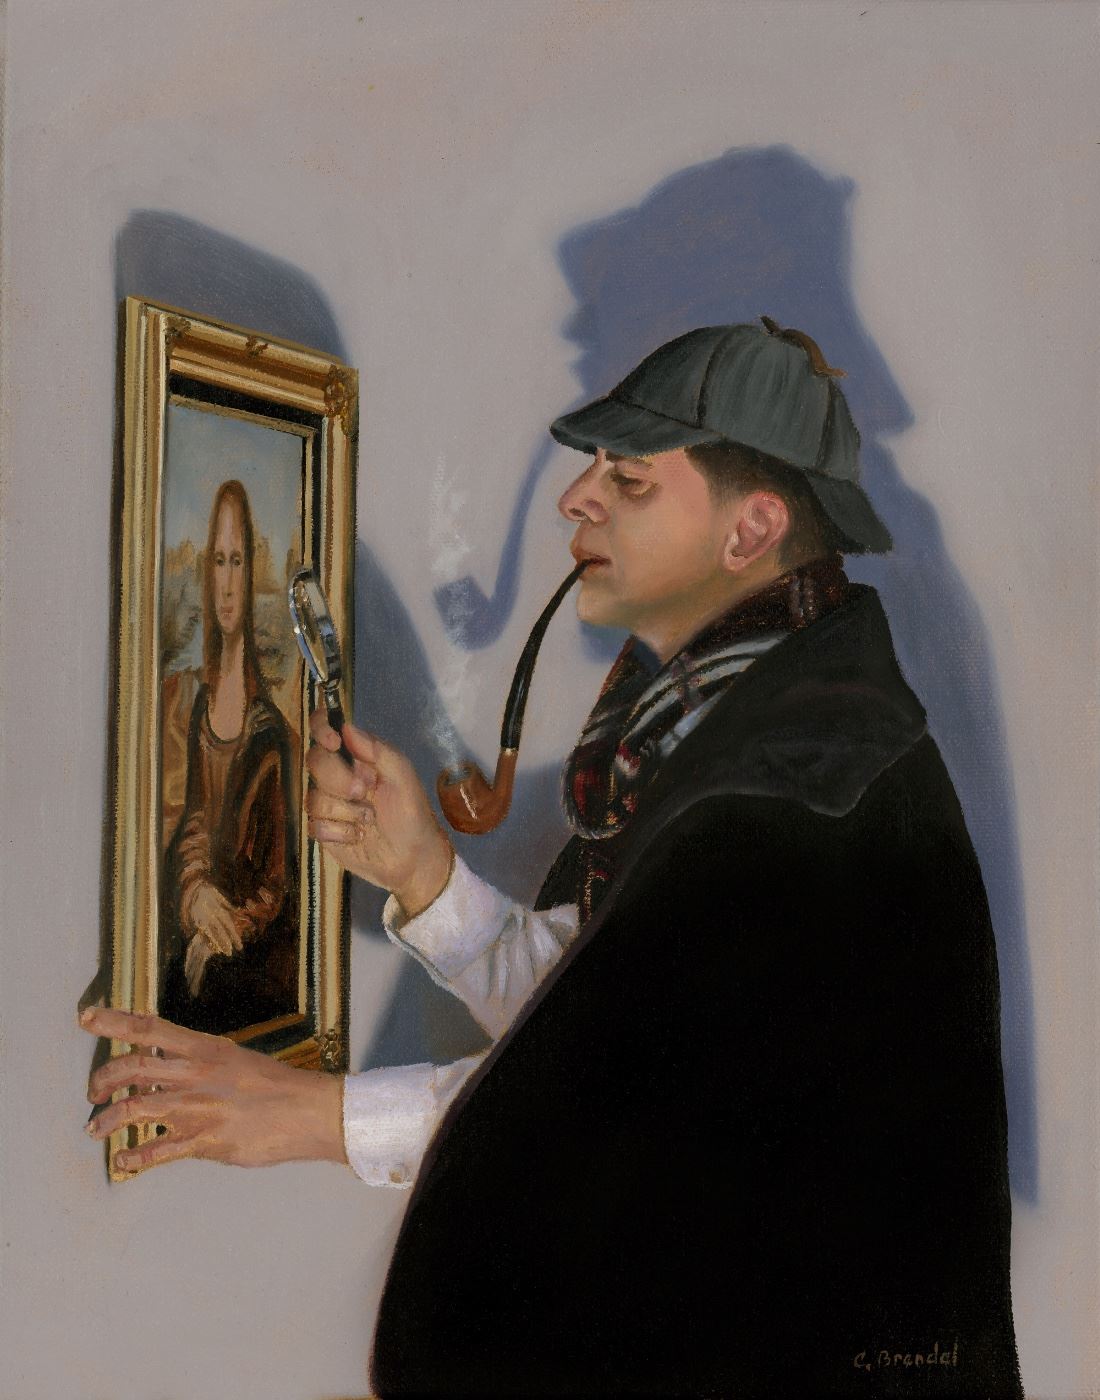 Sherlock Holmes Inspection of mona lisa canvas giclee 